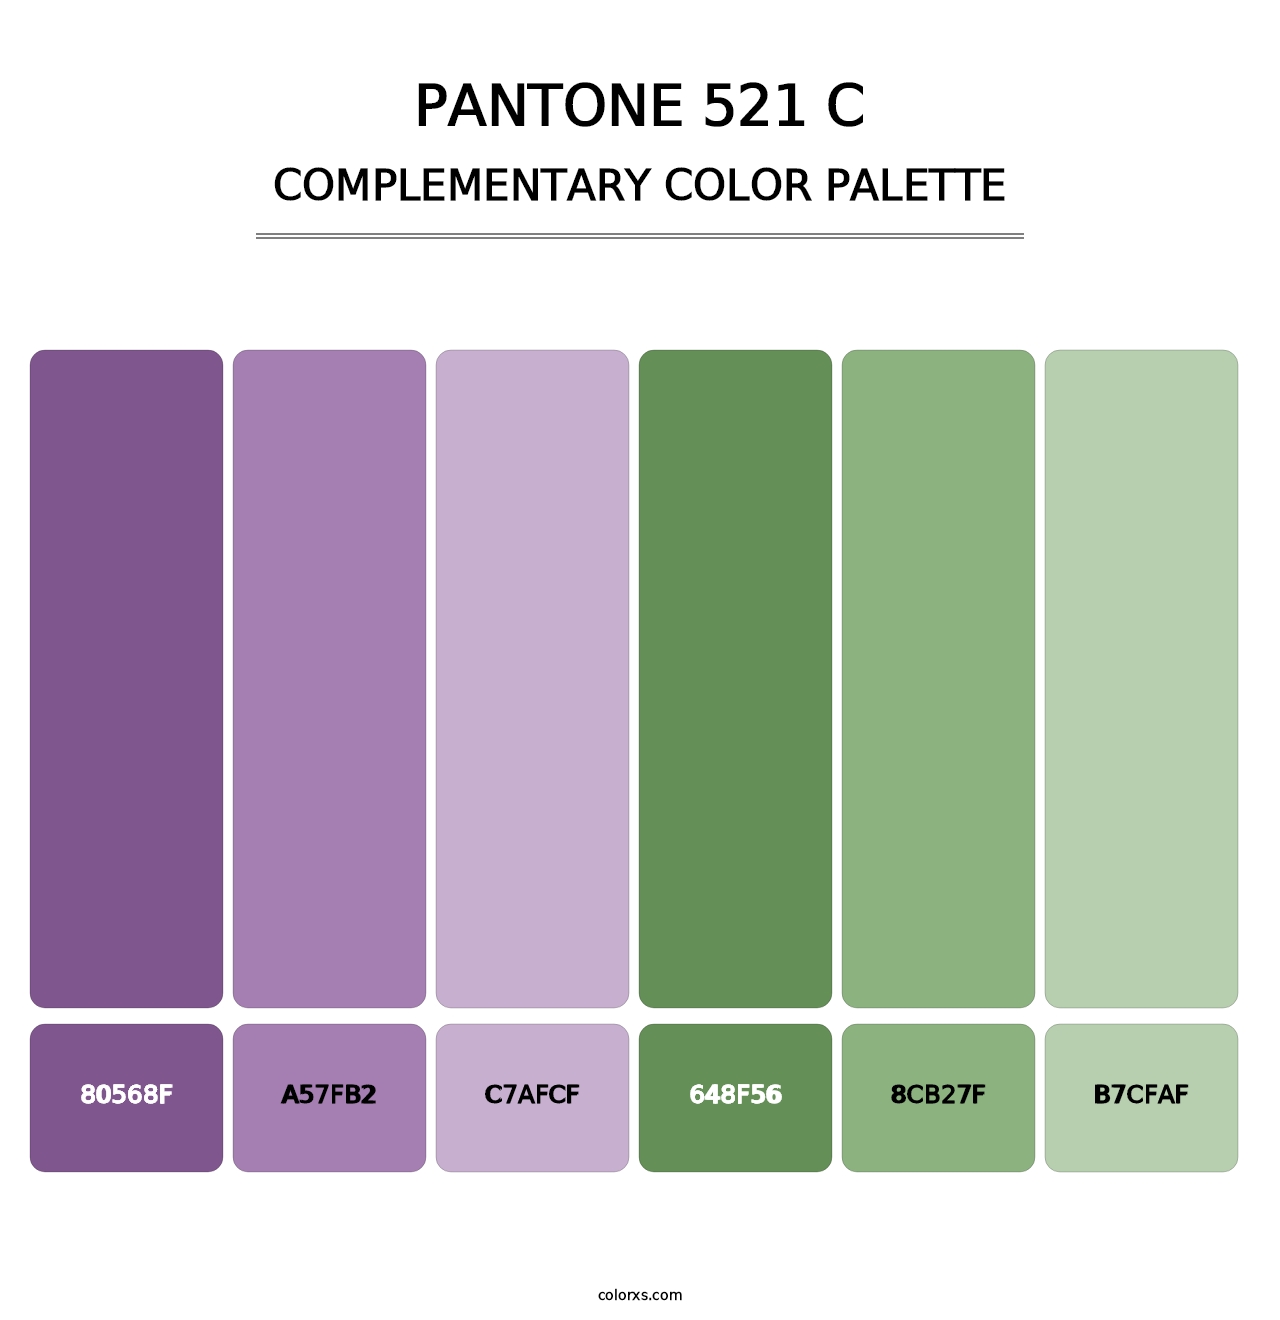 PANTONE 521 C - Complementary Color Palette